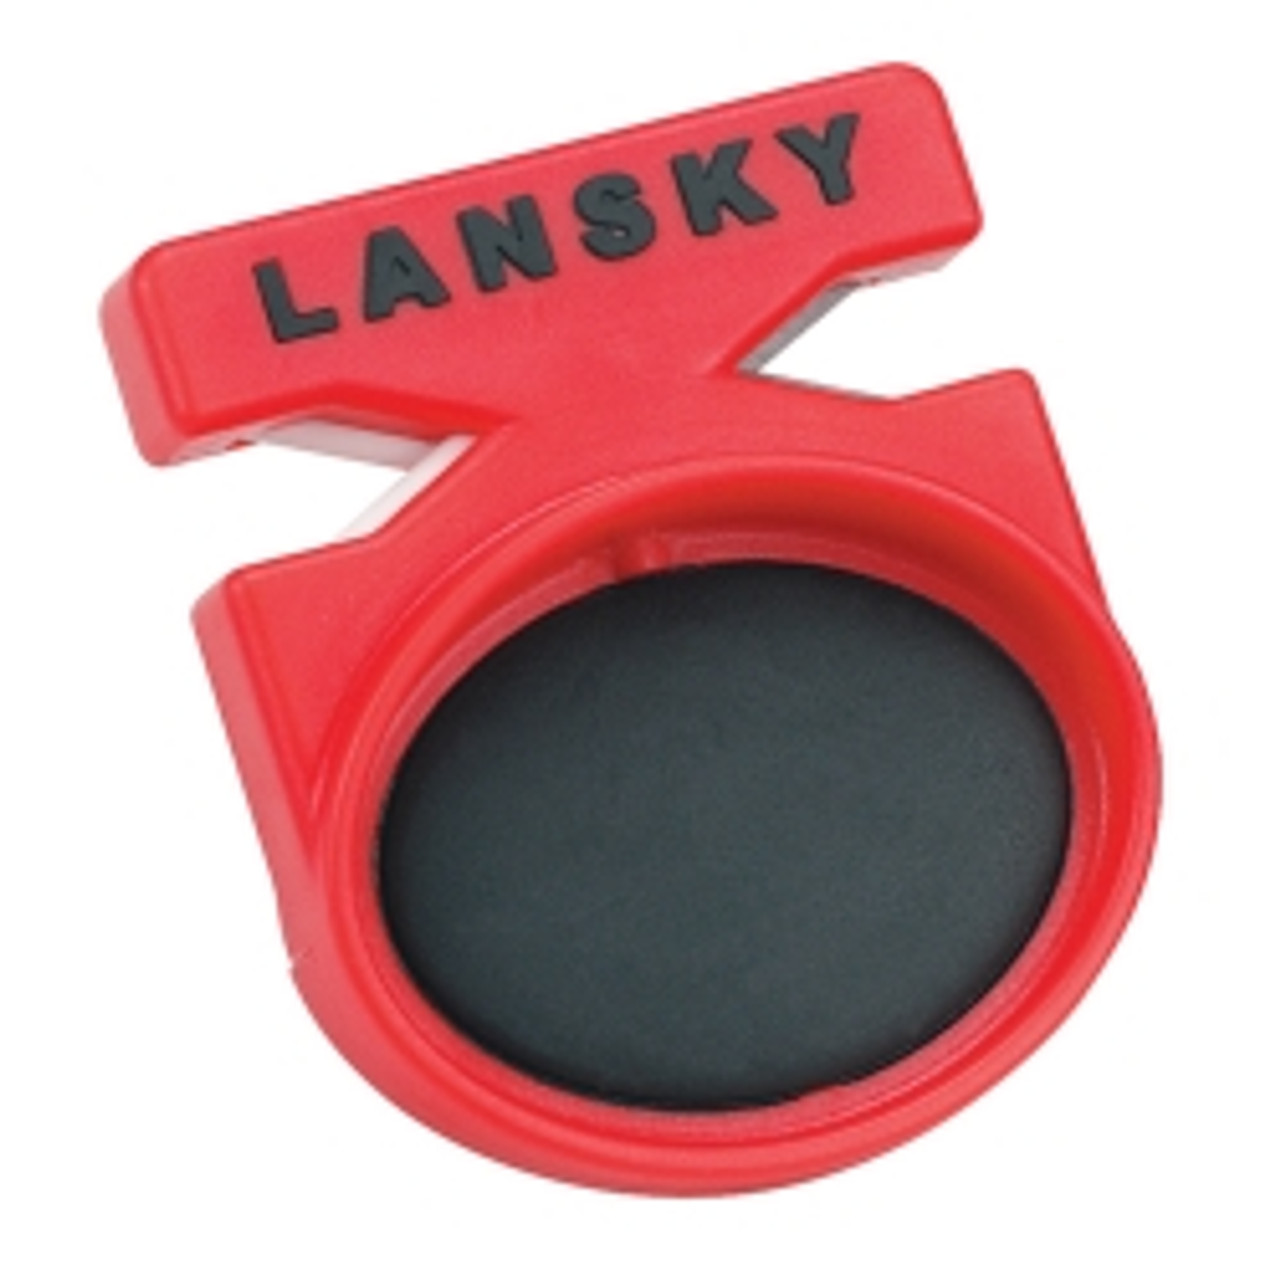 Lansky Mini Crock Stick Knife Sharpener LCKEY Key Chain